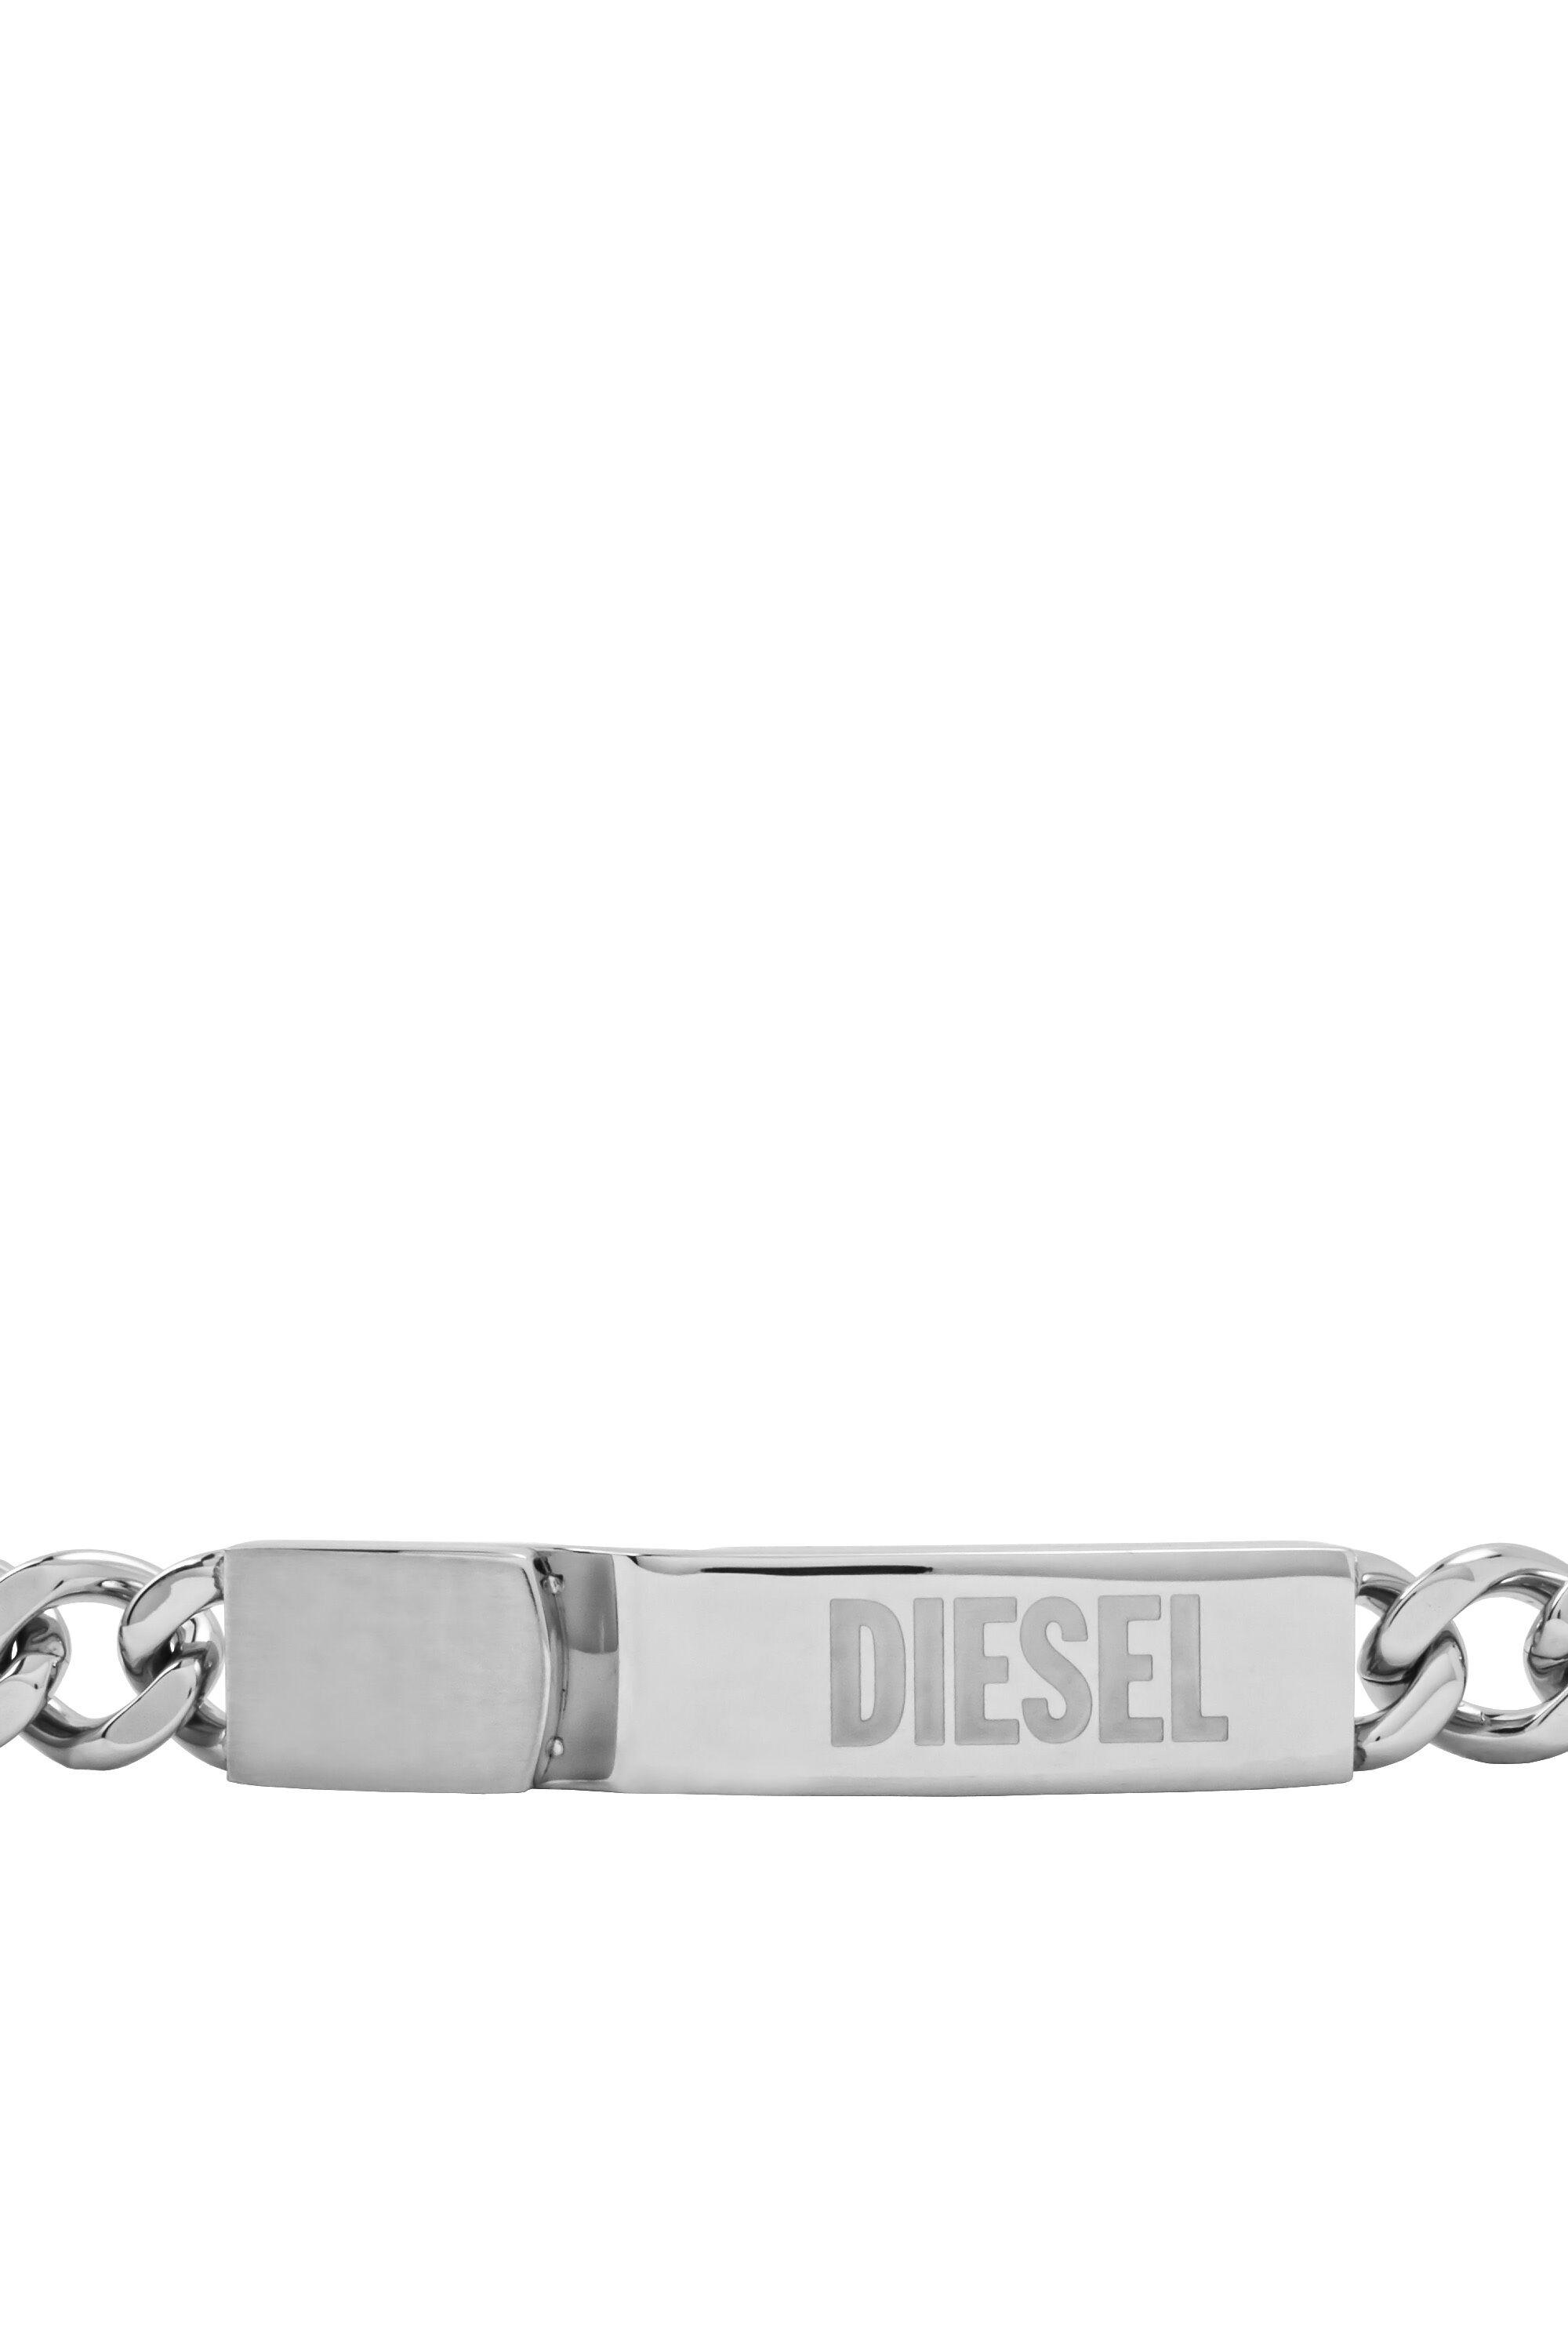 Diesel - DX0966, Male ジュエリー ブレスレット in シルバー - Image 3